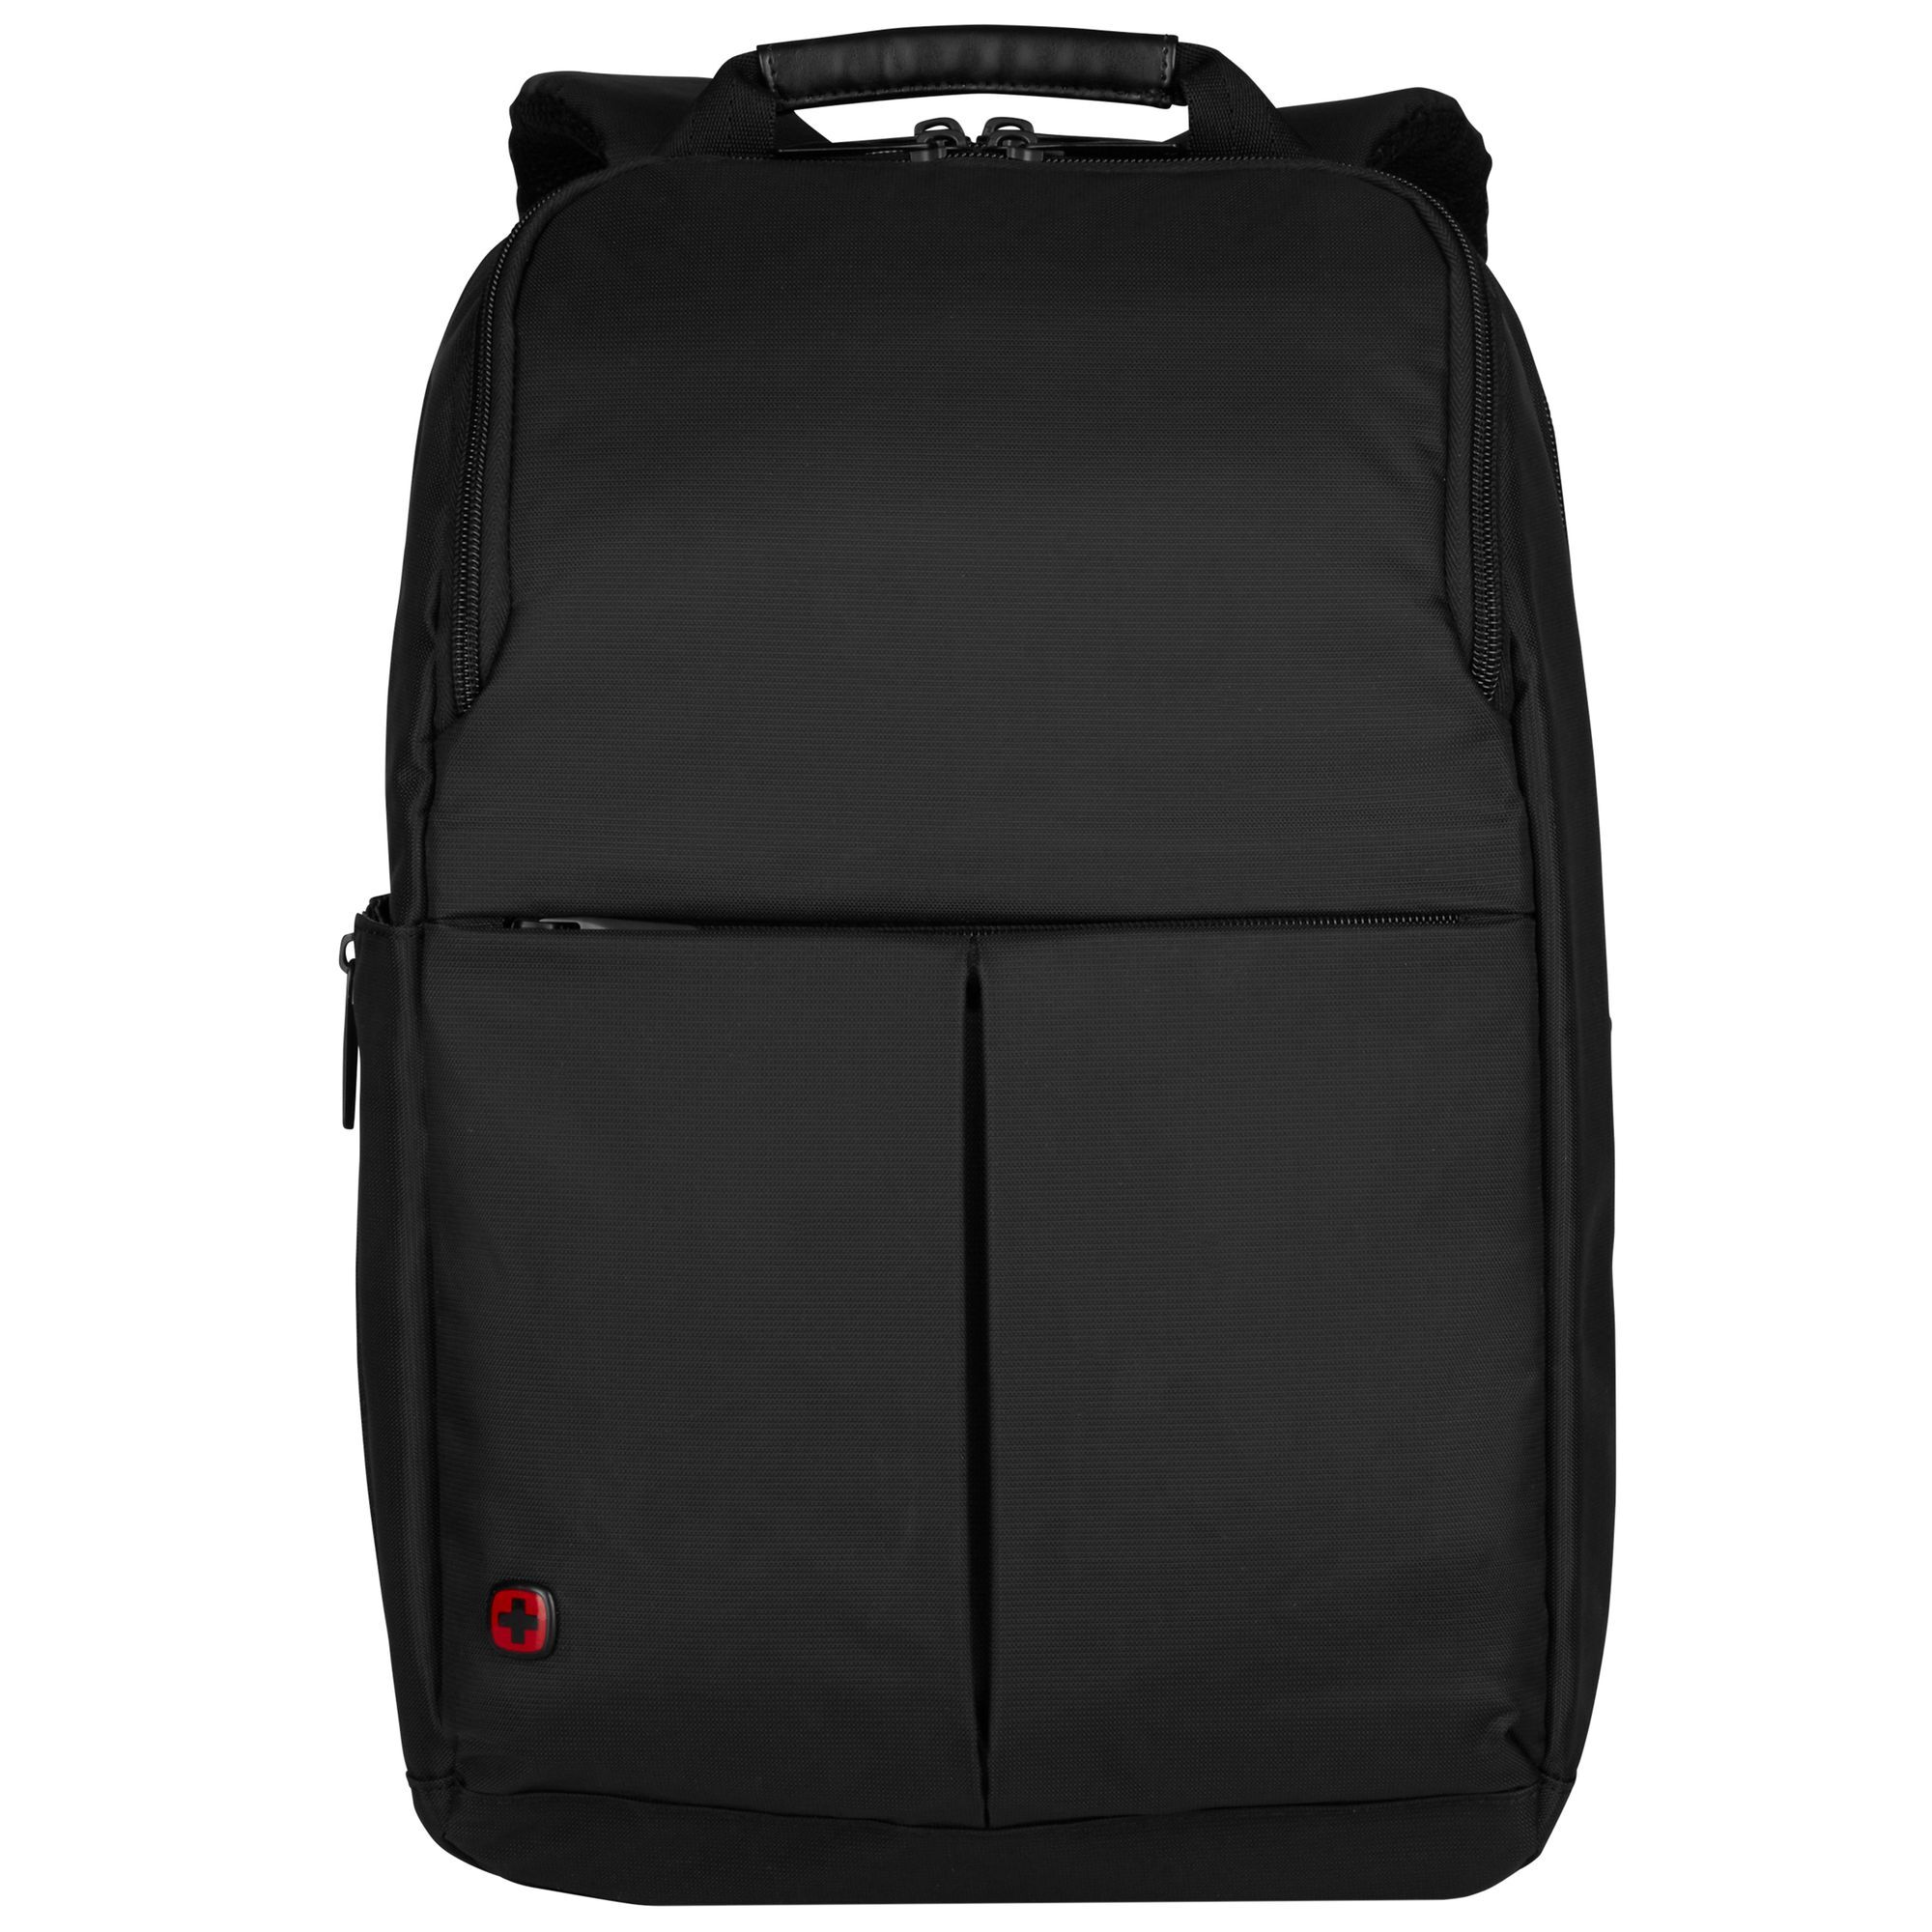 Рюкзак Wenger Reload 14 42 cm Laptopfach, черный рюкзак wenger reload 601068 черный